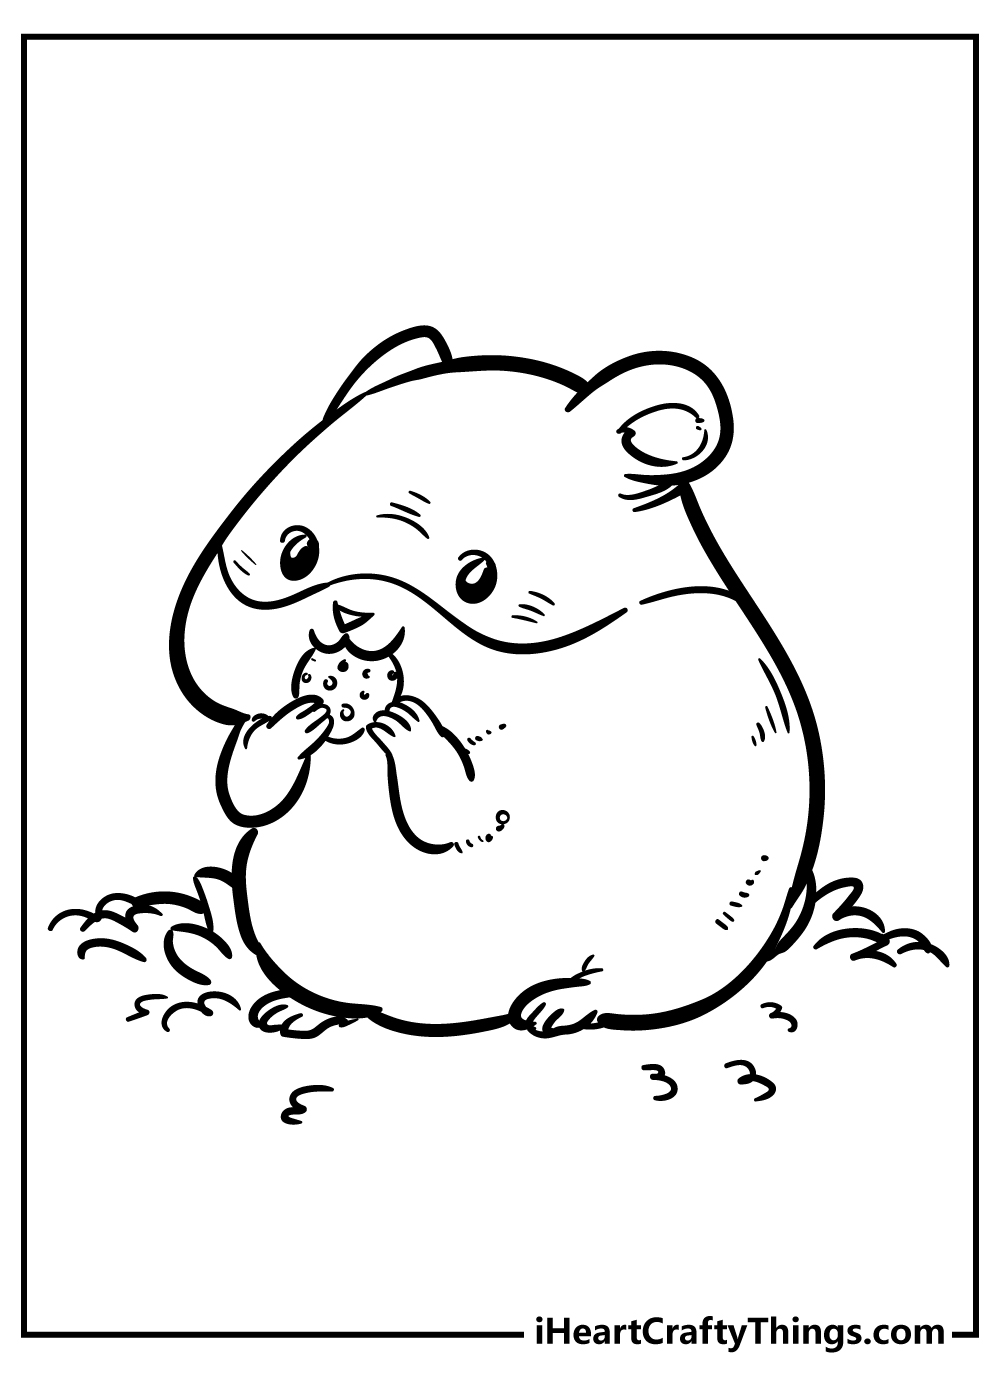 Hamster Coloring Original Sheet for children free download